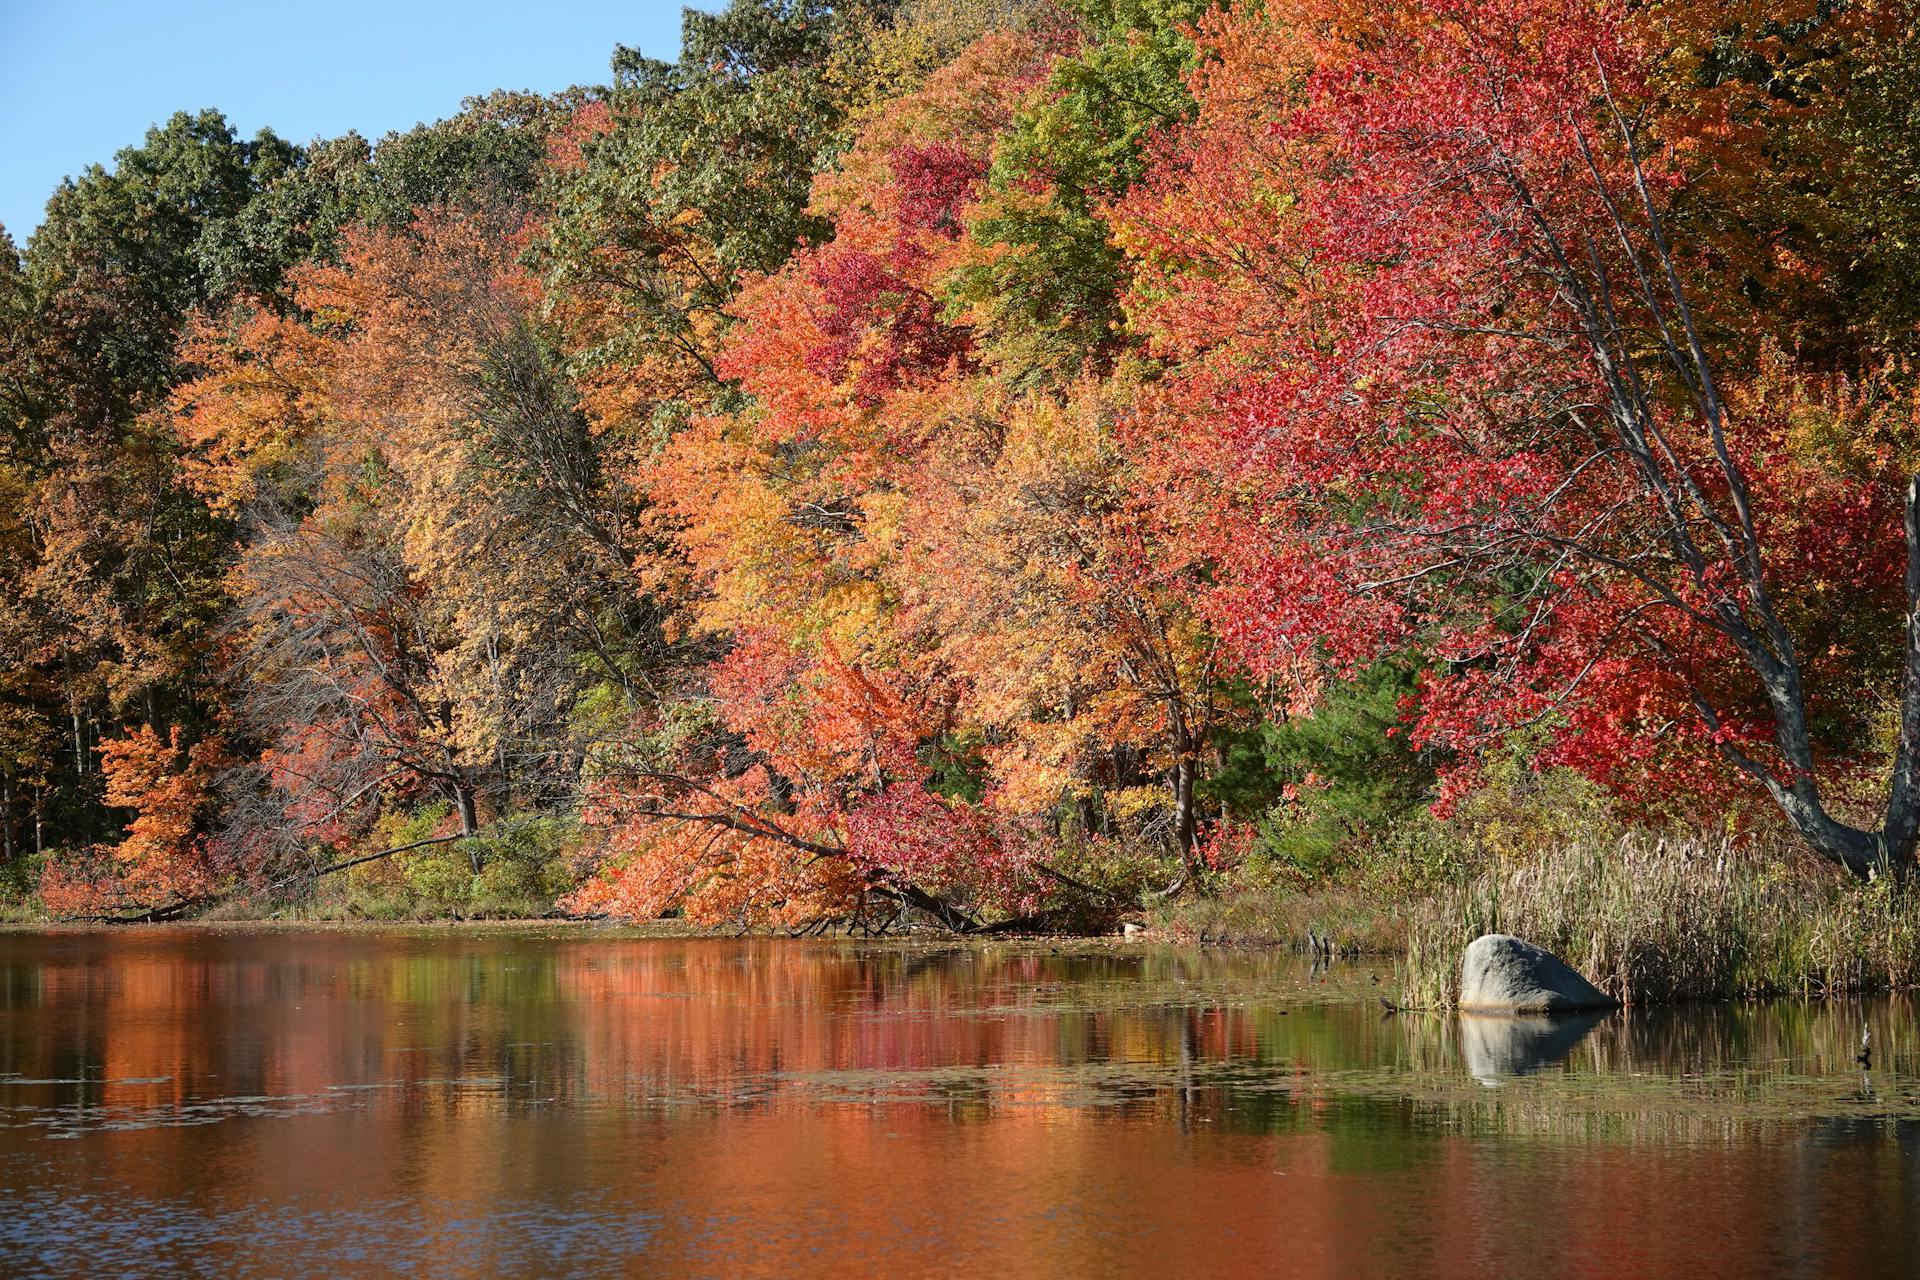 A serene lake reflecting vibrant fall foliage in Massachusetts